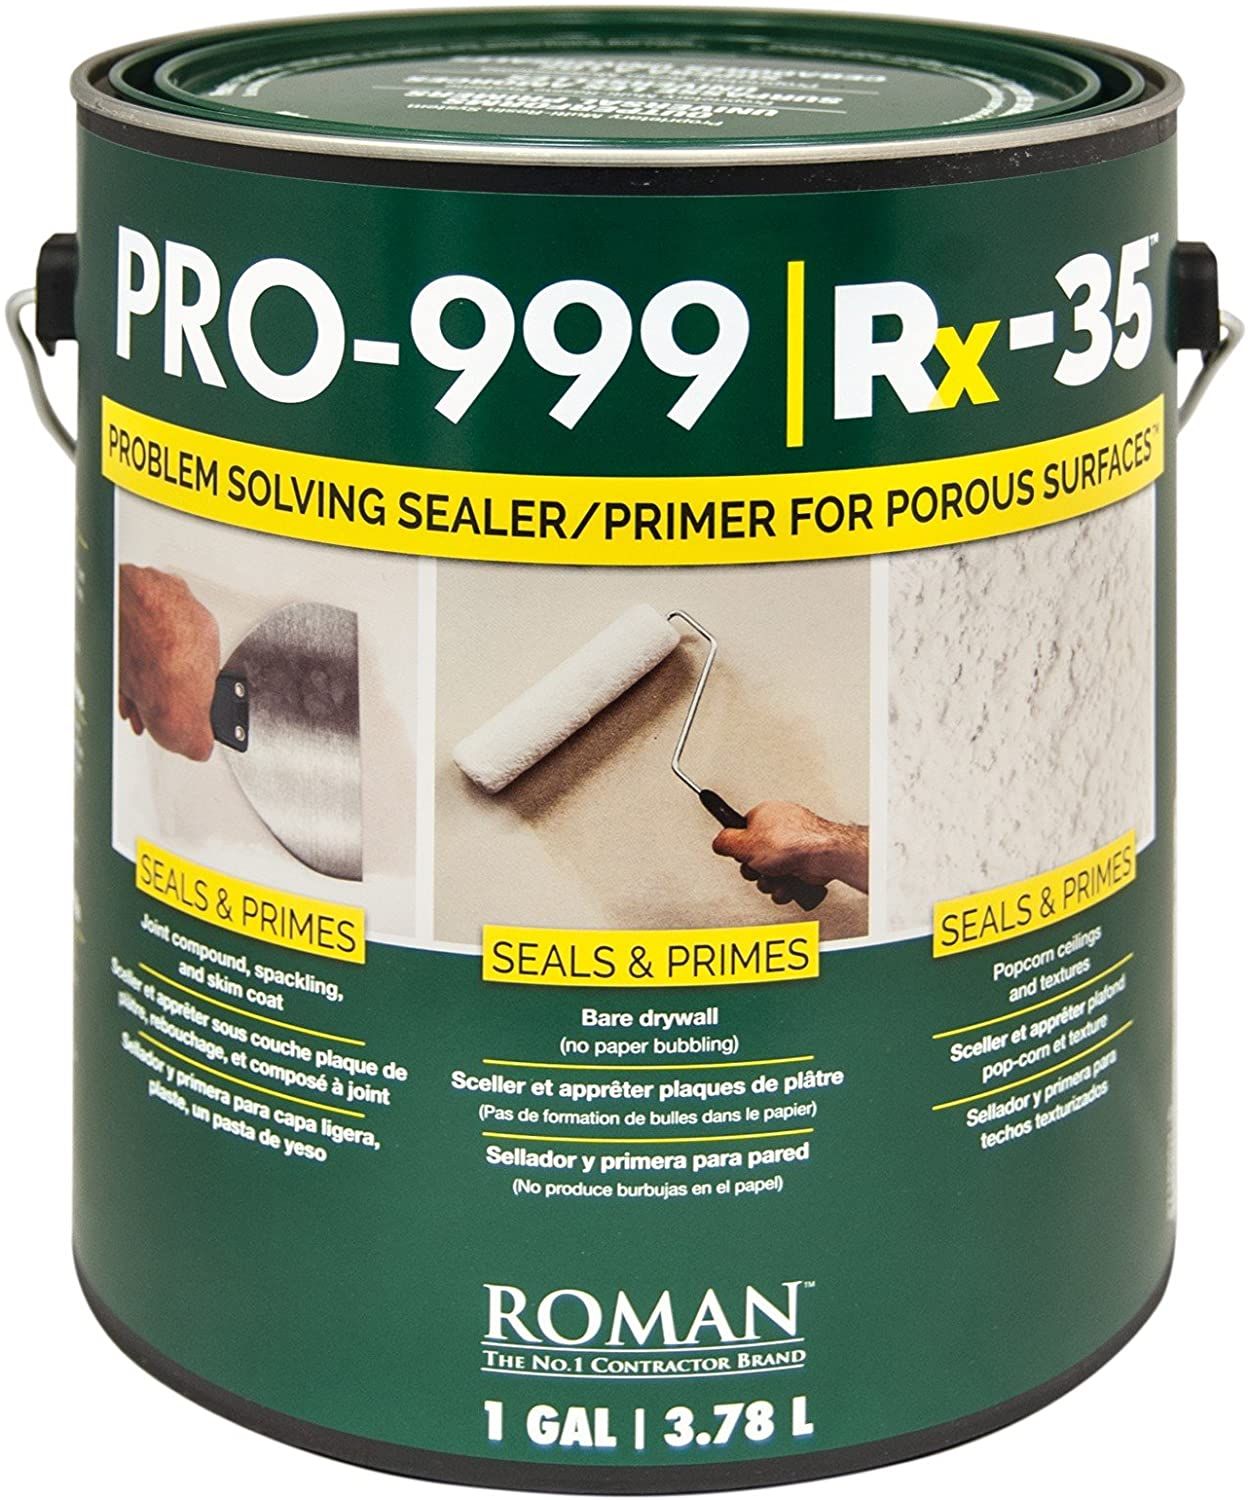 ROMAN PRO-999 Rx-35 Problem Solving Sealer/Primer Can